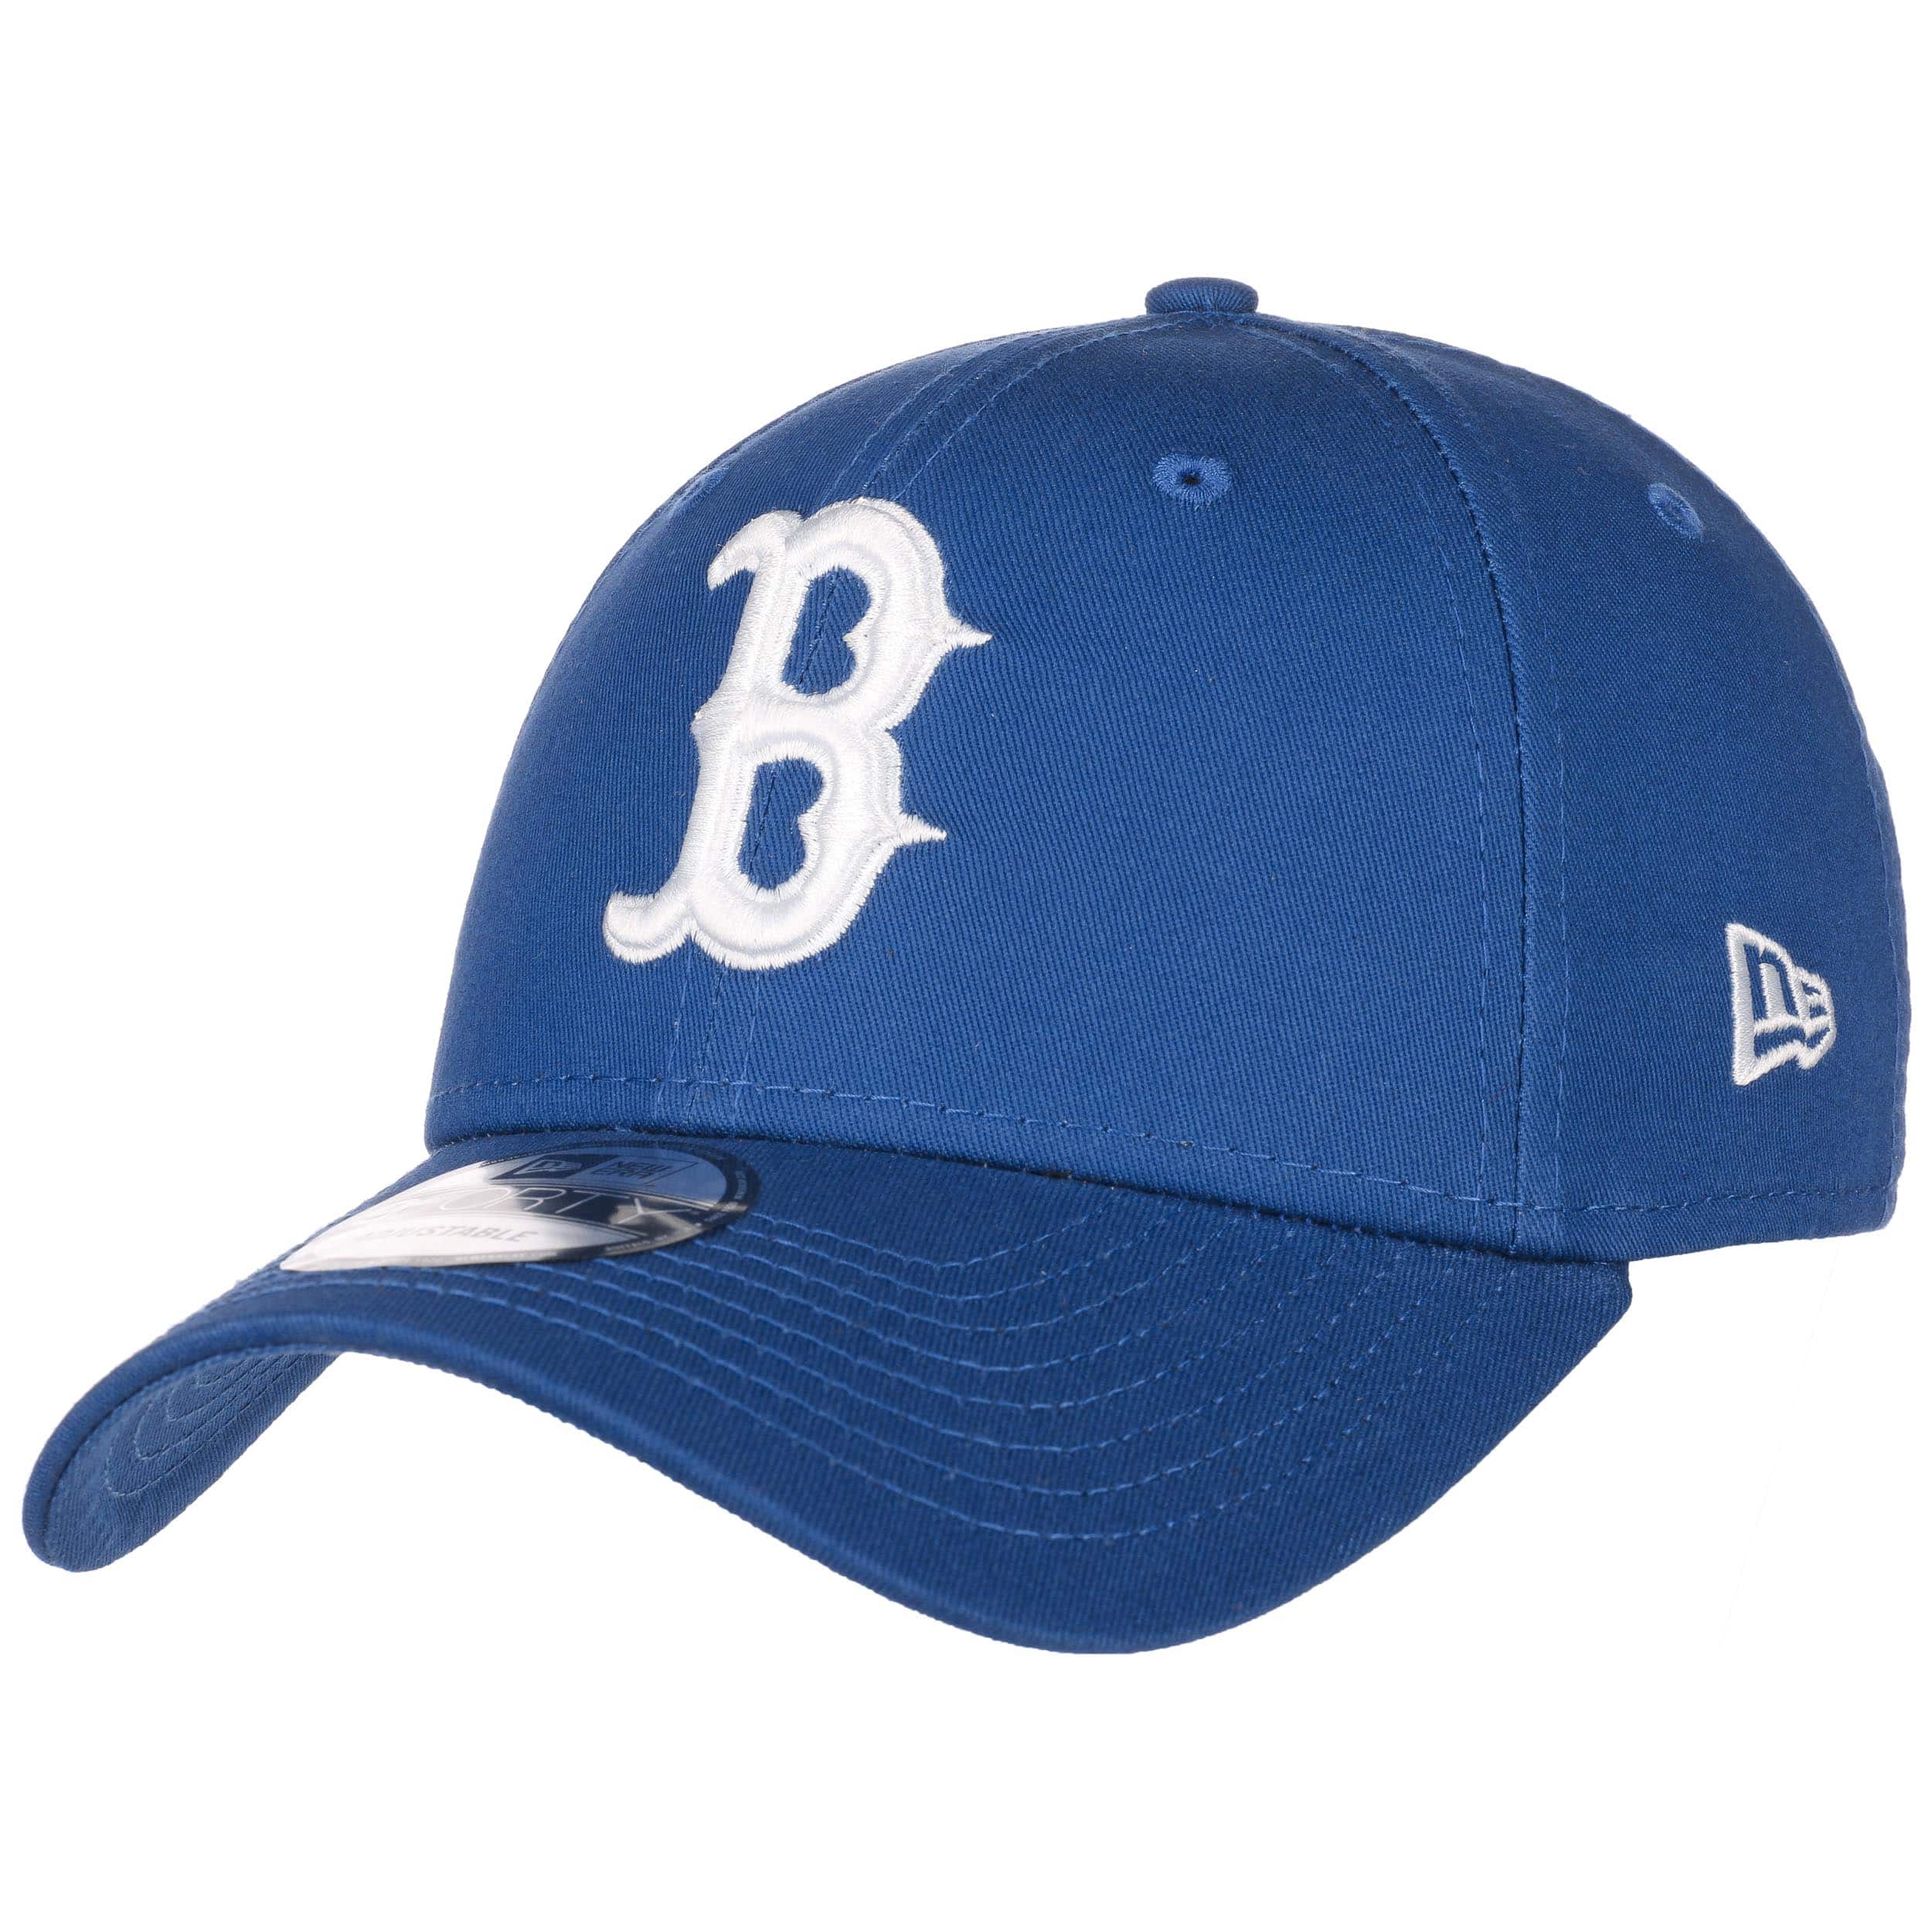 New Era 9FORTY Cap League Essential Boston Red Sox bluegreen